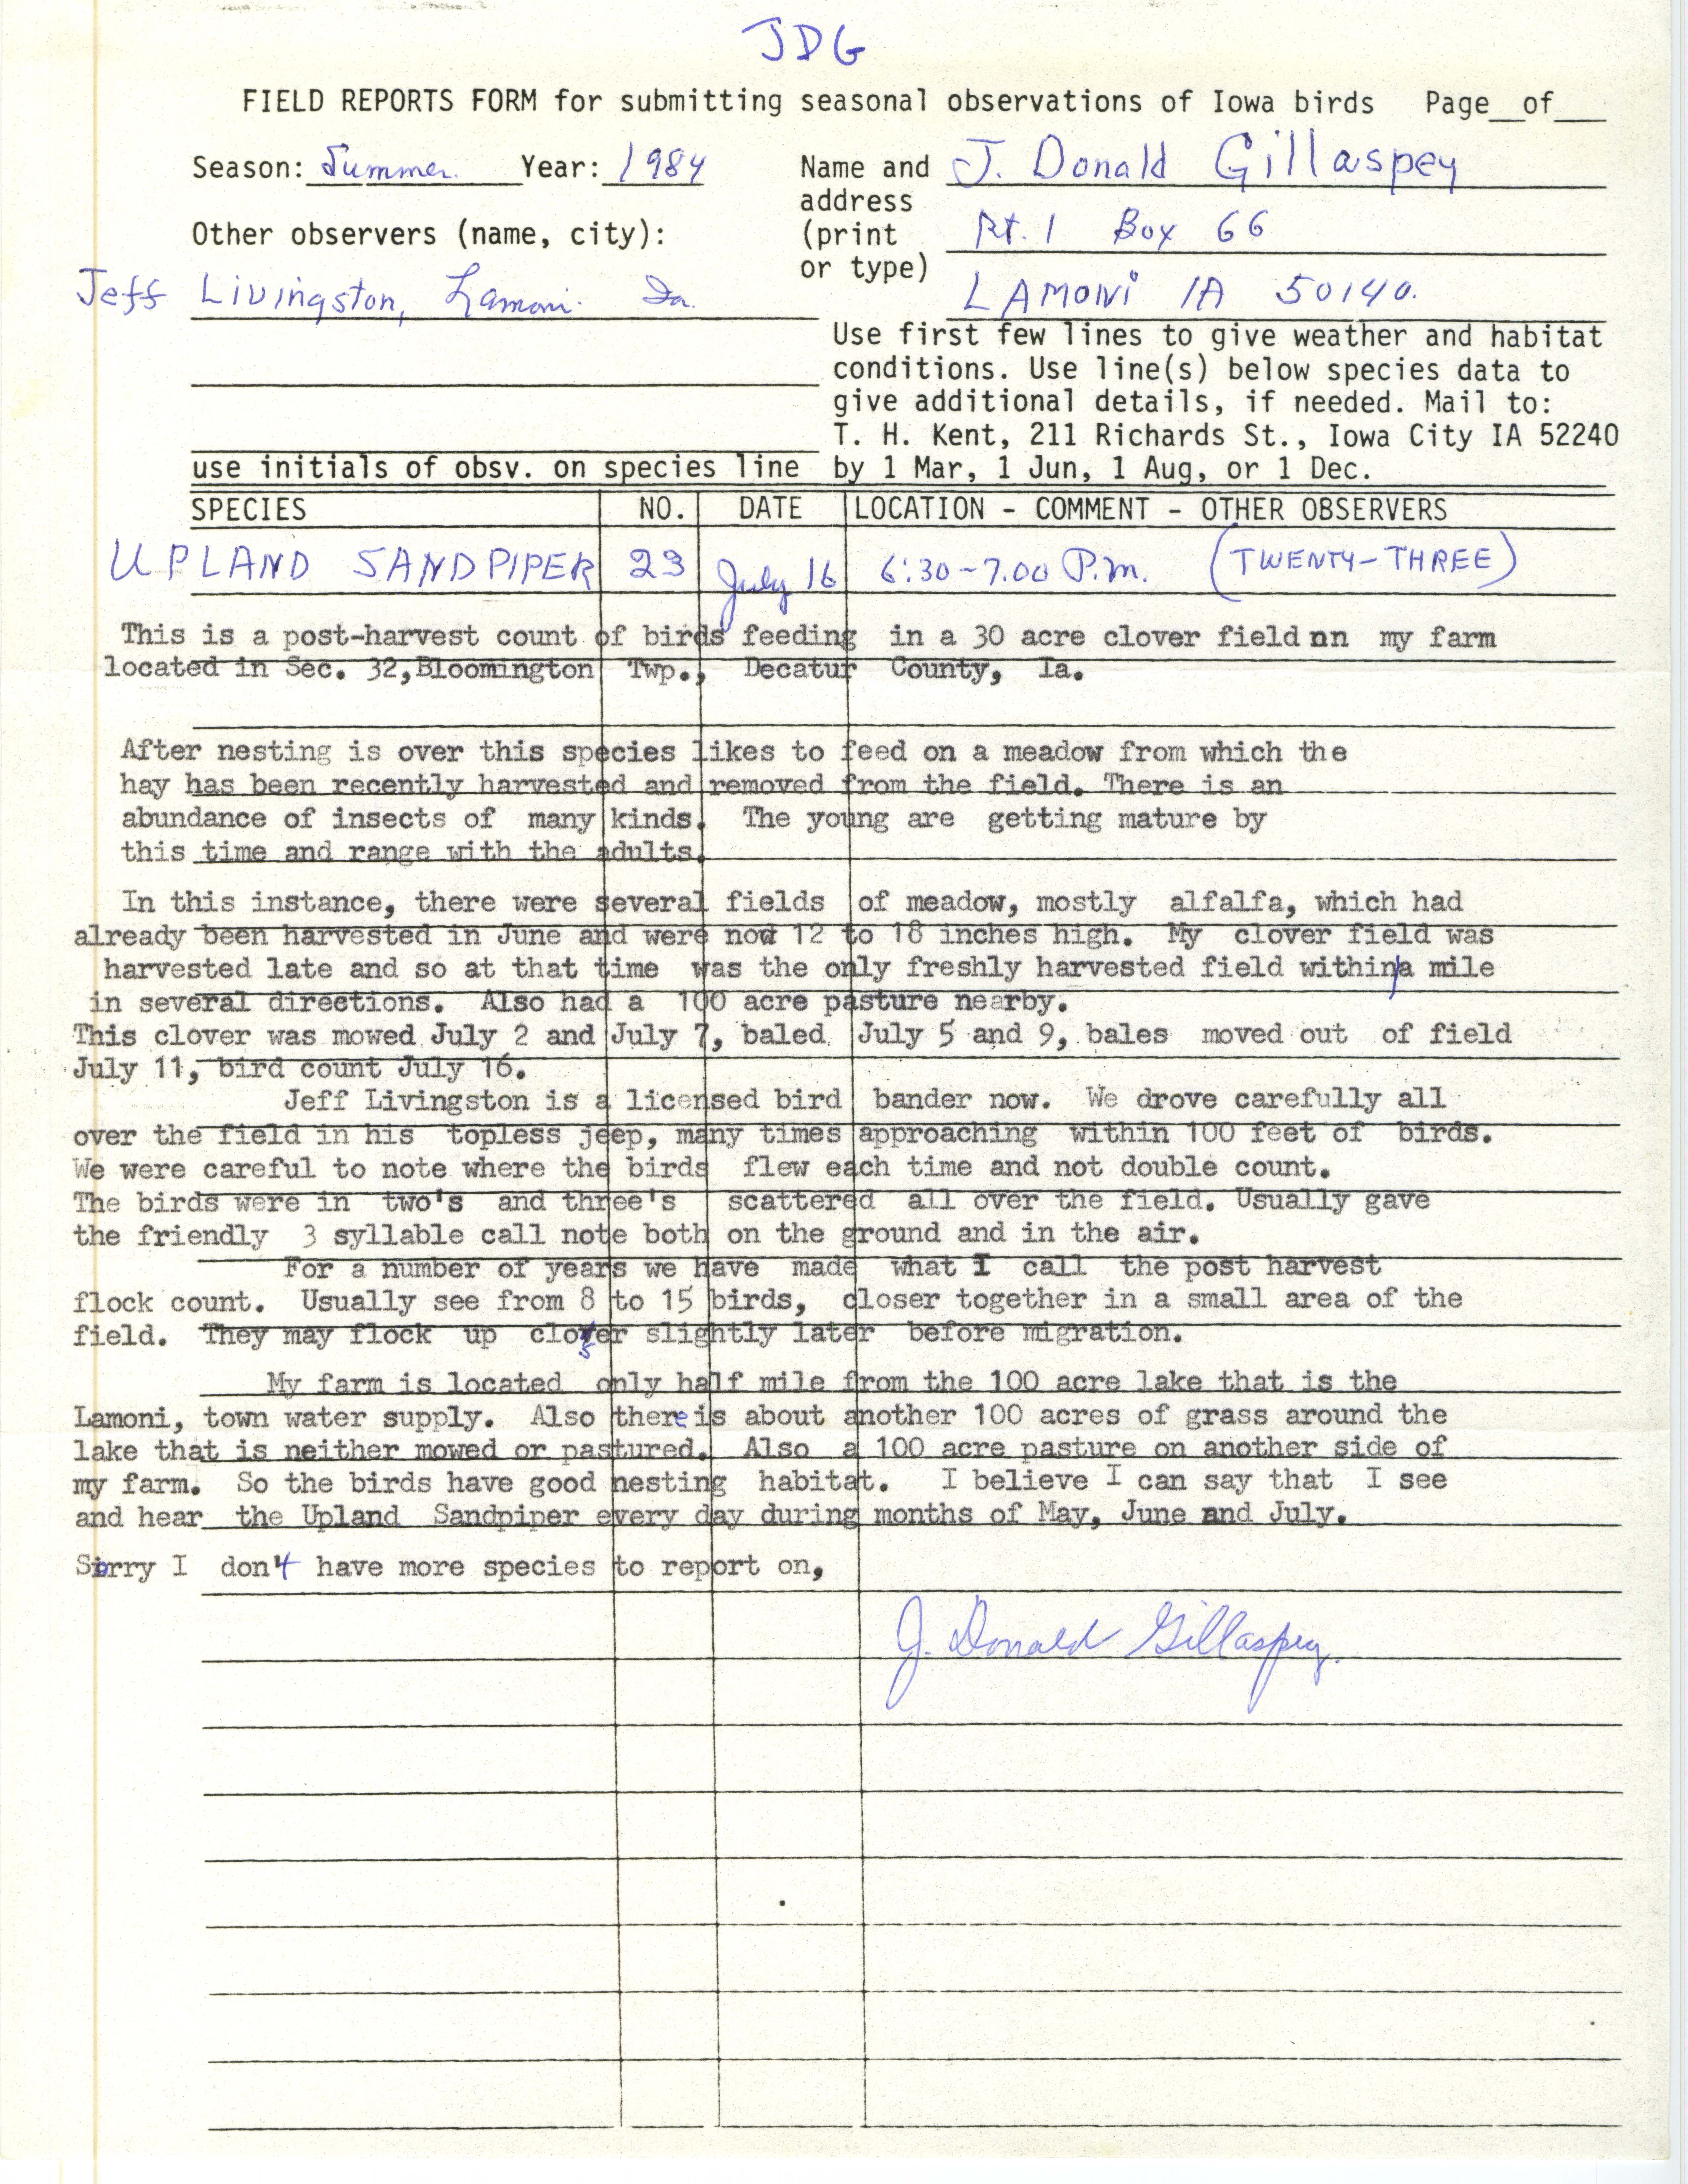 Field notes contributed by J. Donald Gillaspey, Lamoni, Iowa, summer 1984